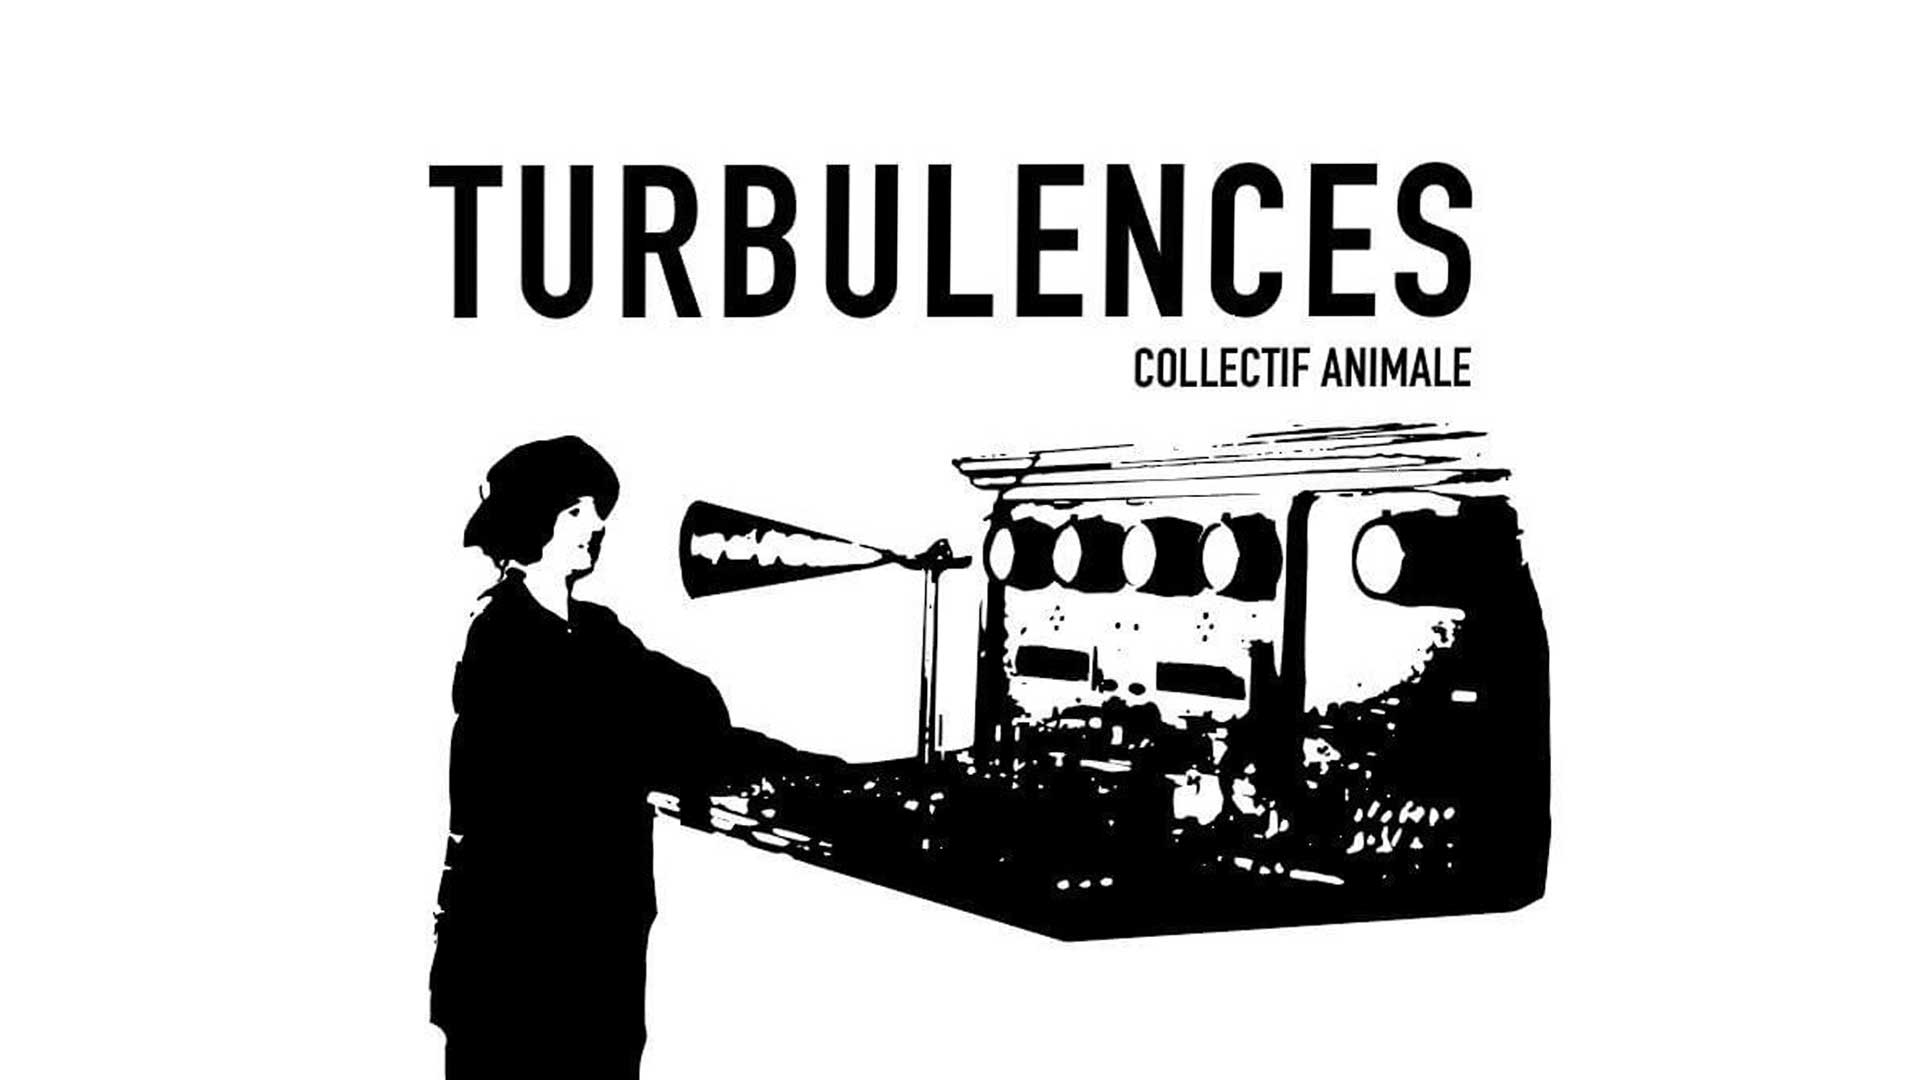 "Turbulences" Collectif ANIMALE